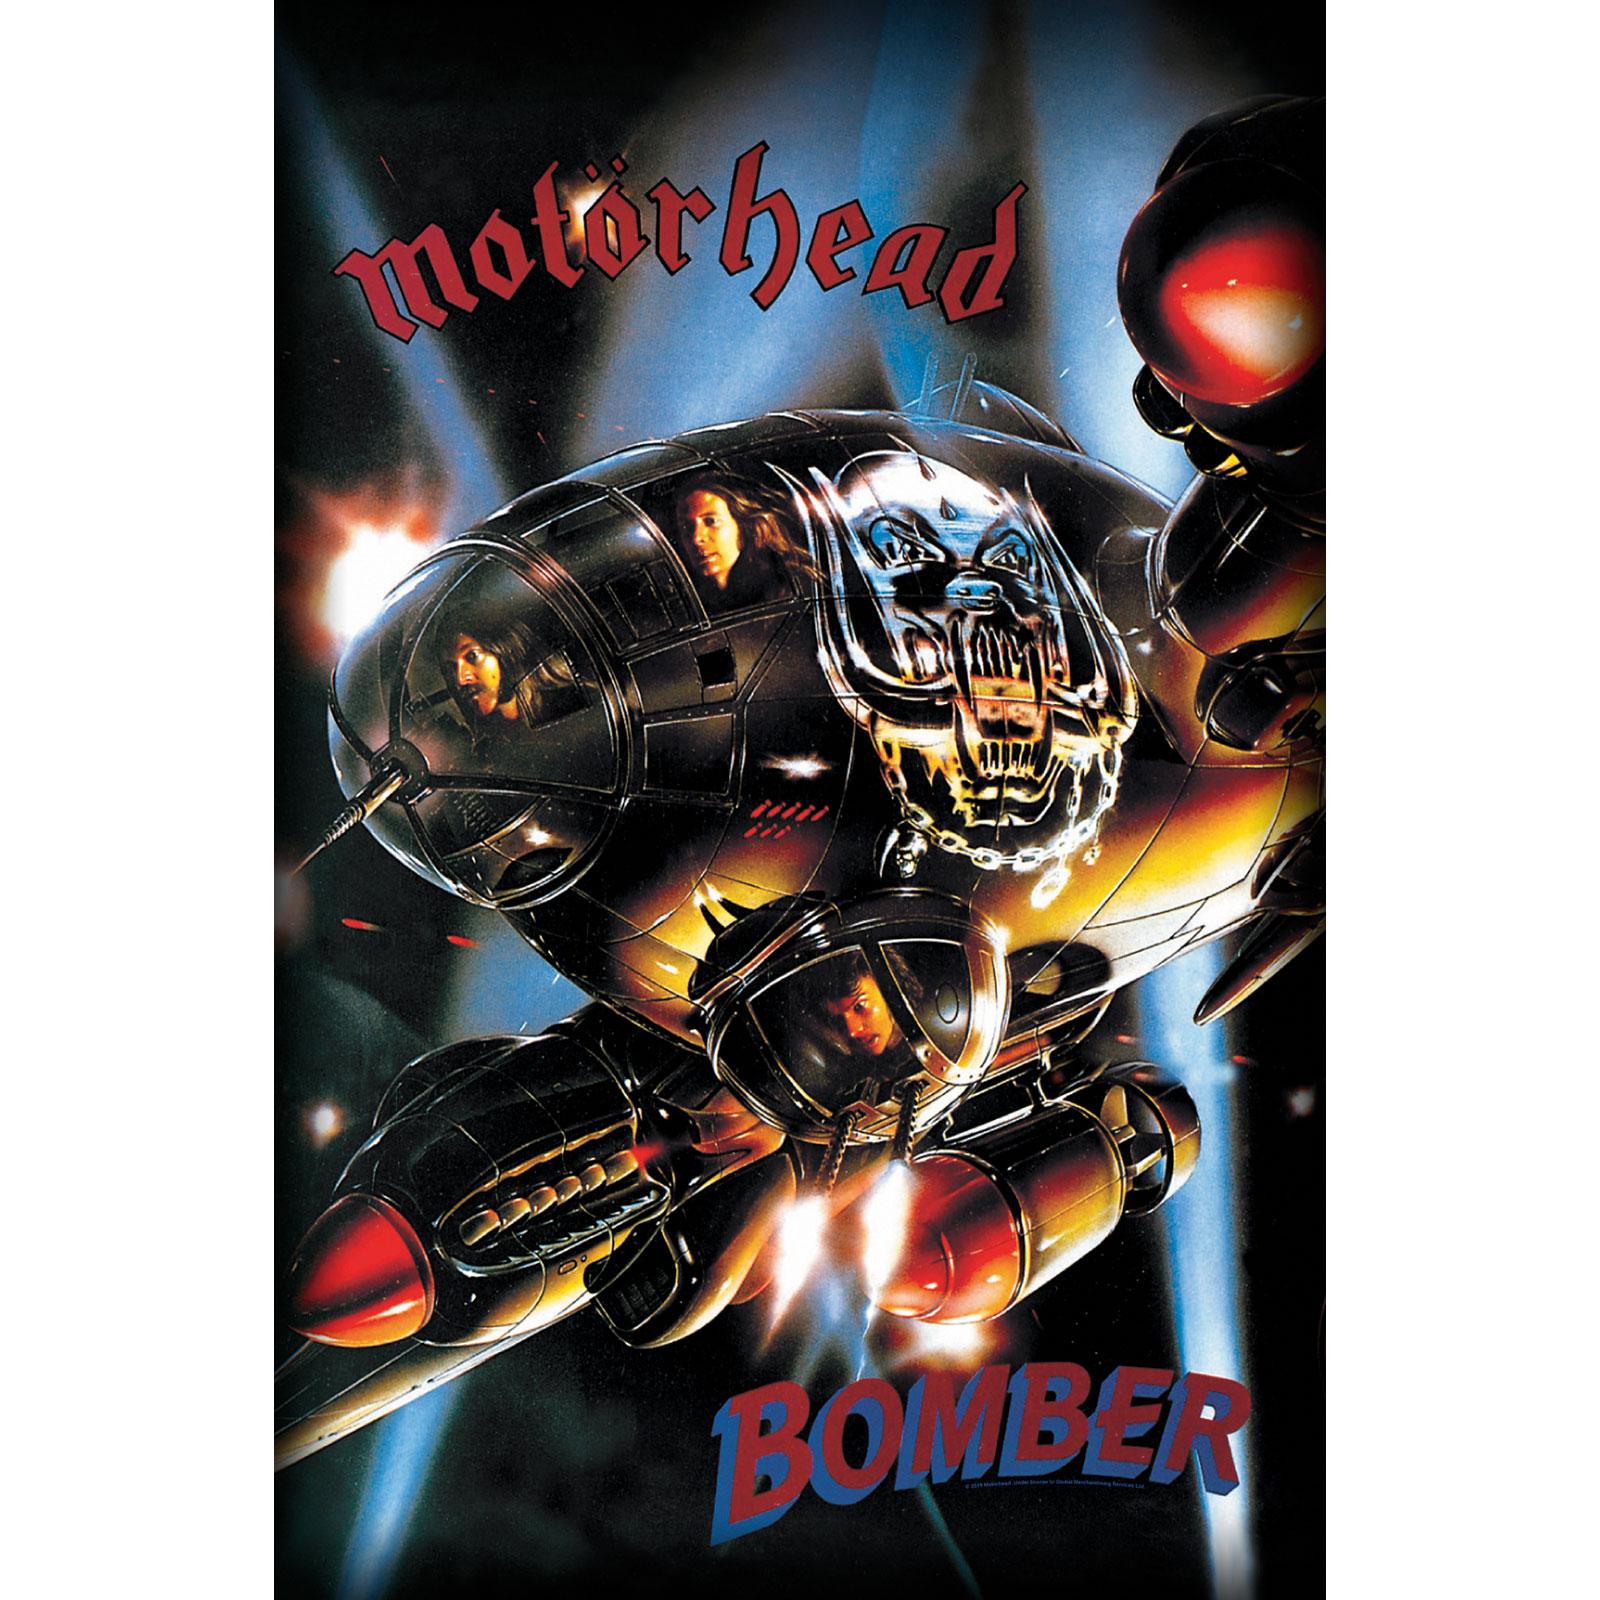 MOTORHEAD Bomber